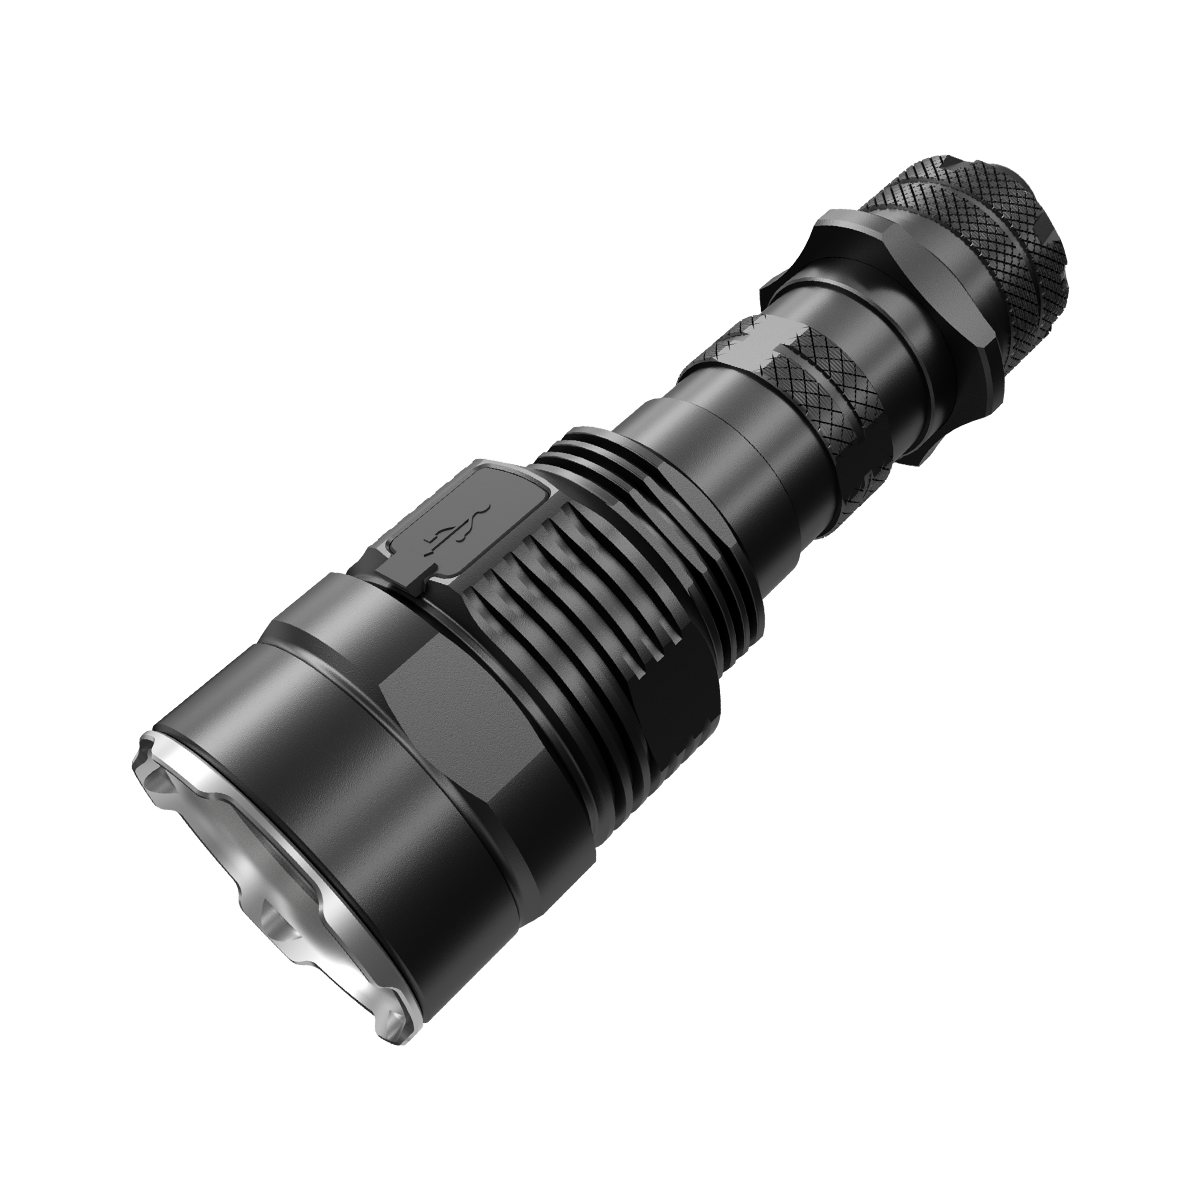  Nitecore TM9K TAC Tactical Flashlight, 9800 Lumen USB